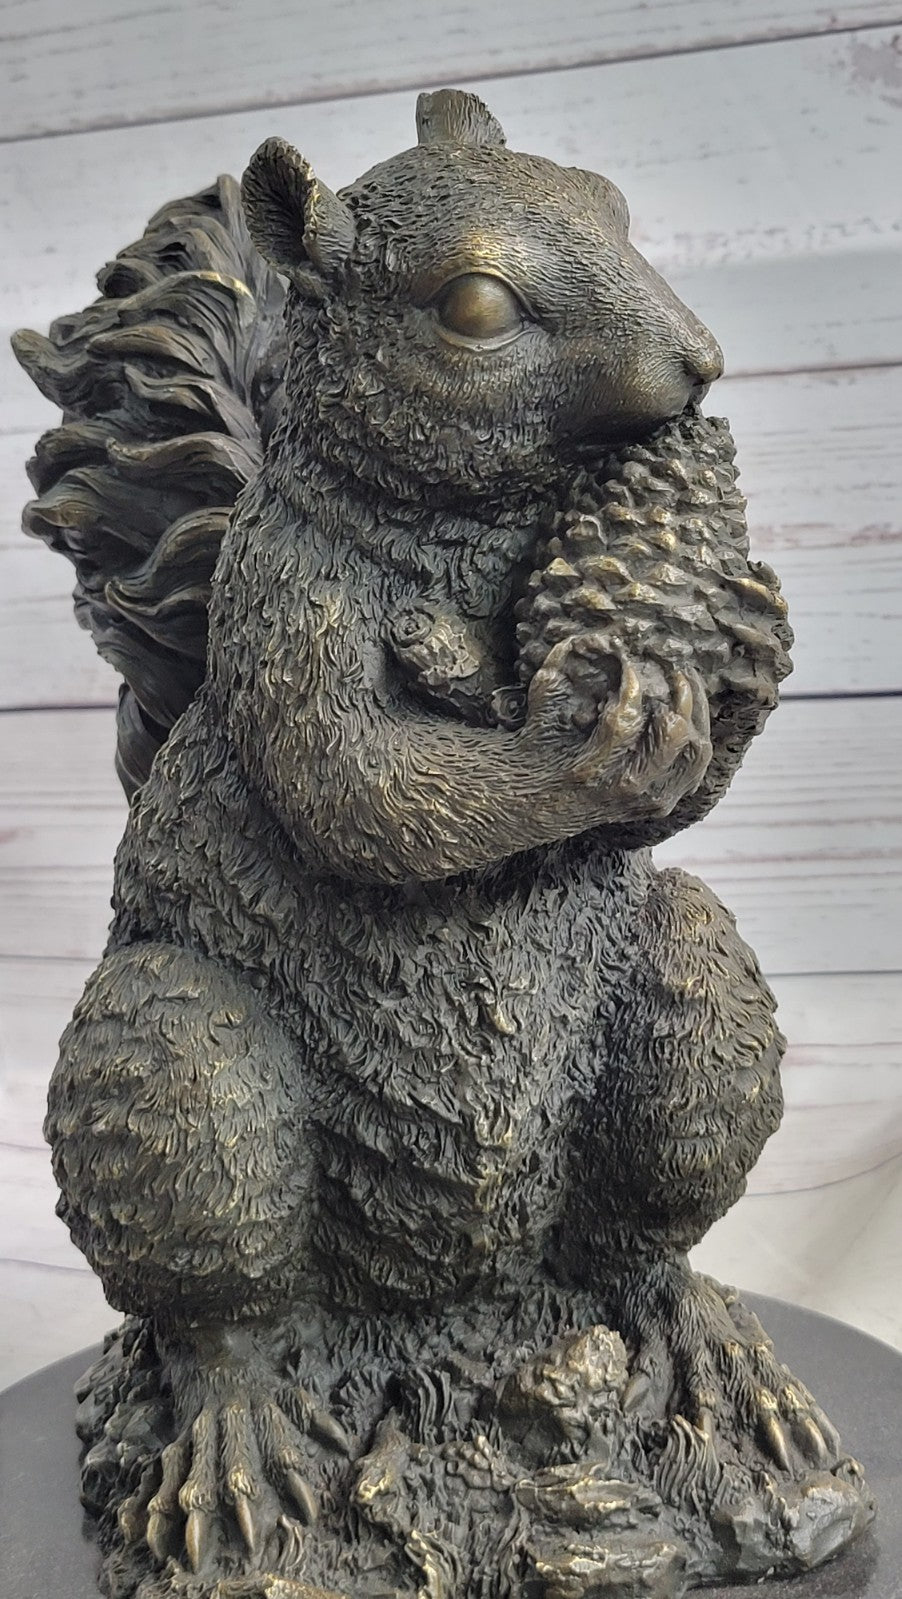 Handmade Bronze Squirrel Figurine | Sculpture Statue with Exquisite Detailing